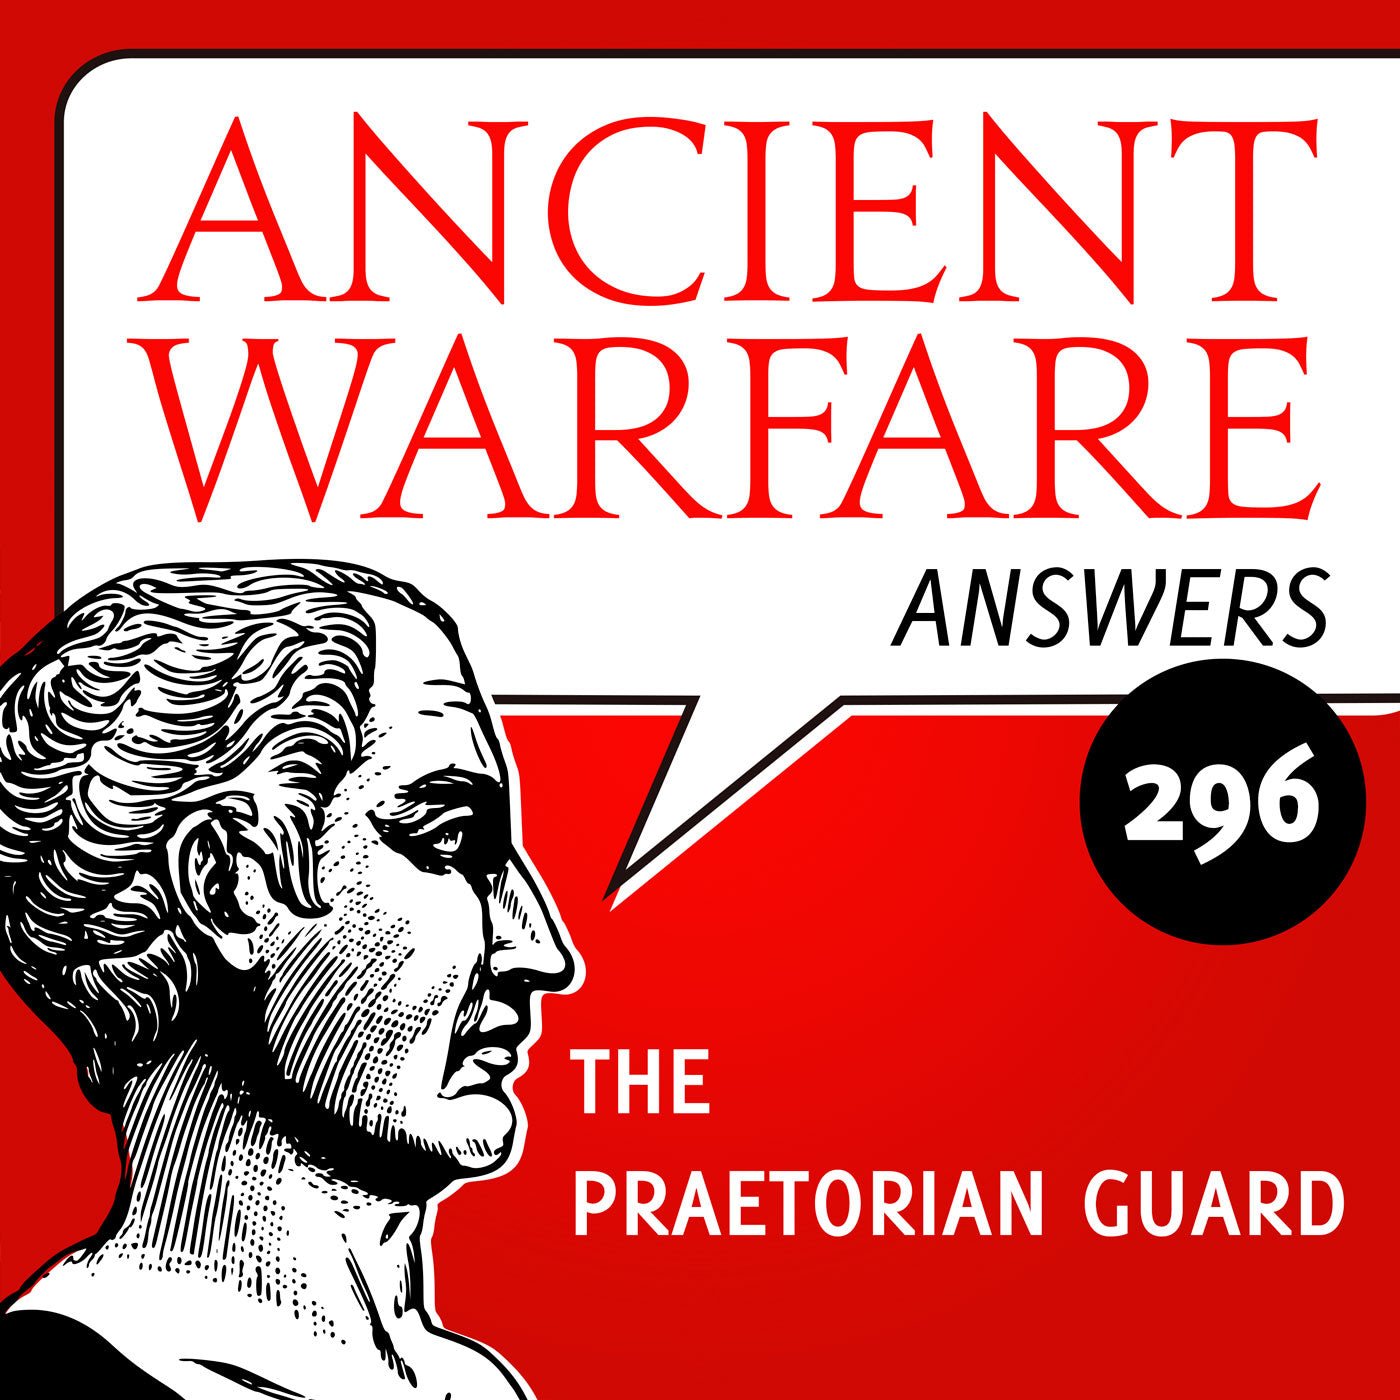 Ancient Warfare Answers (296): The Praetorian Guard